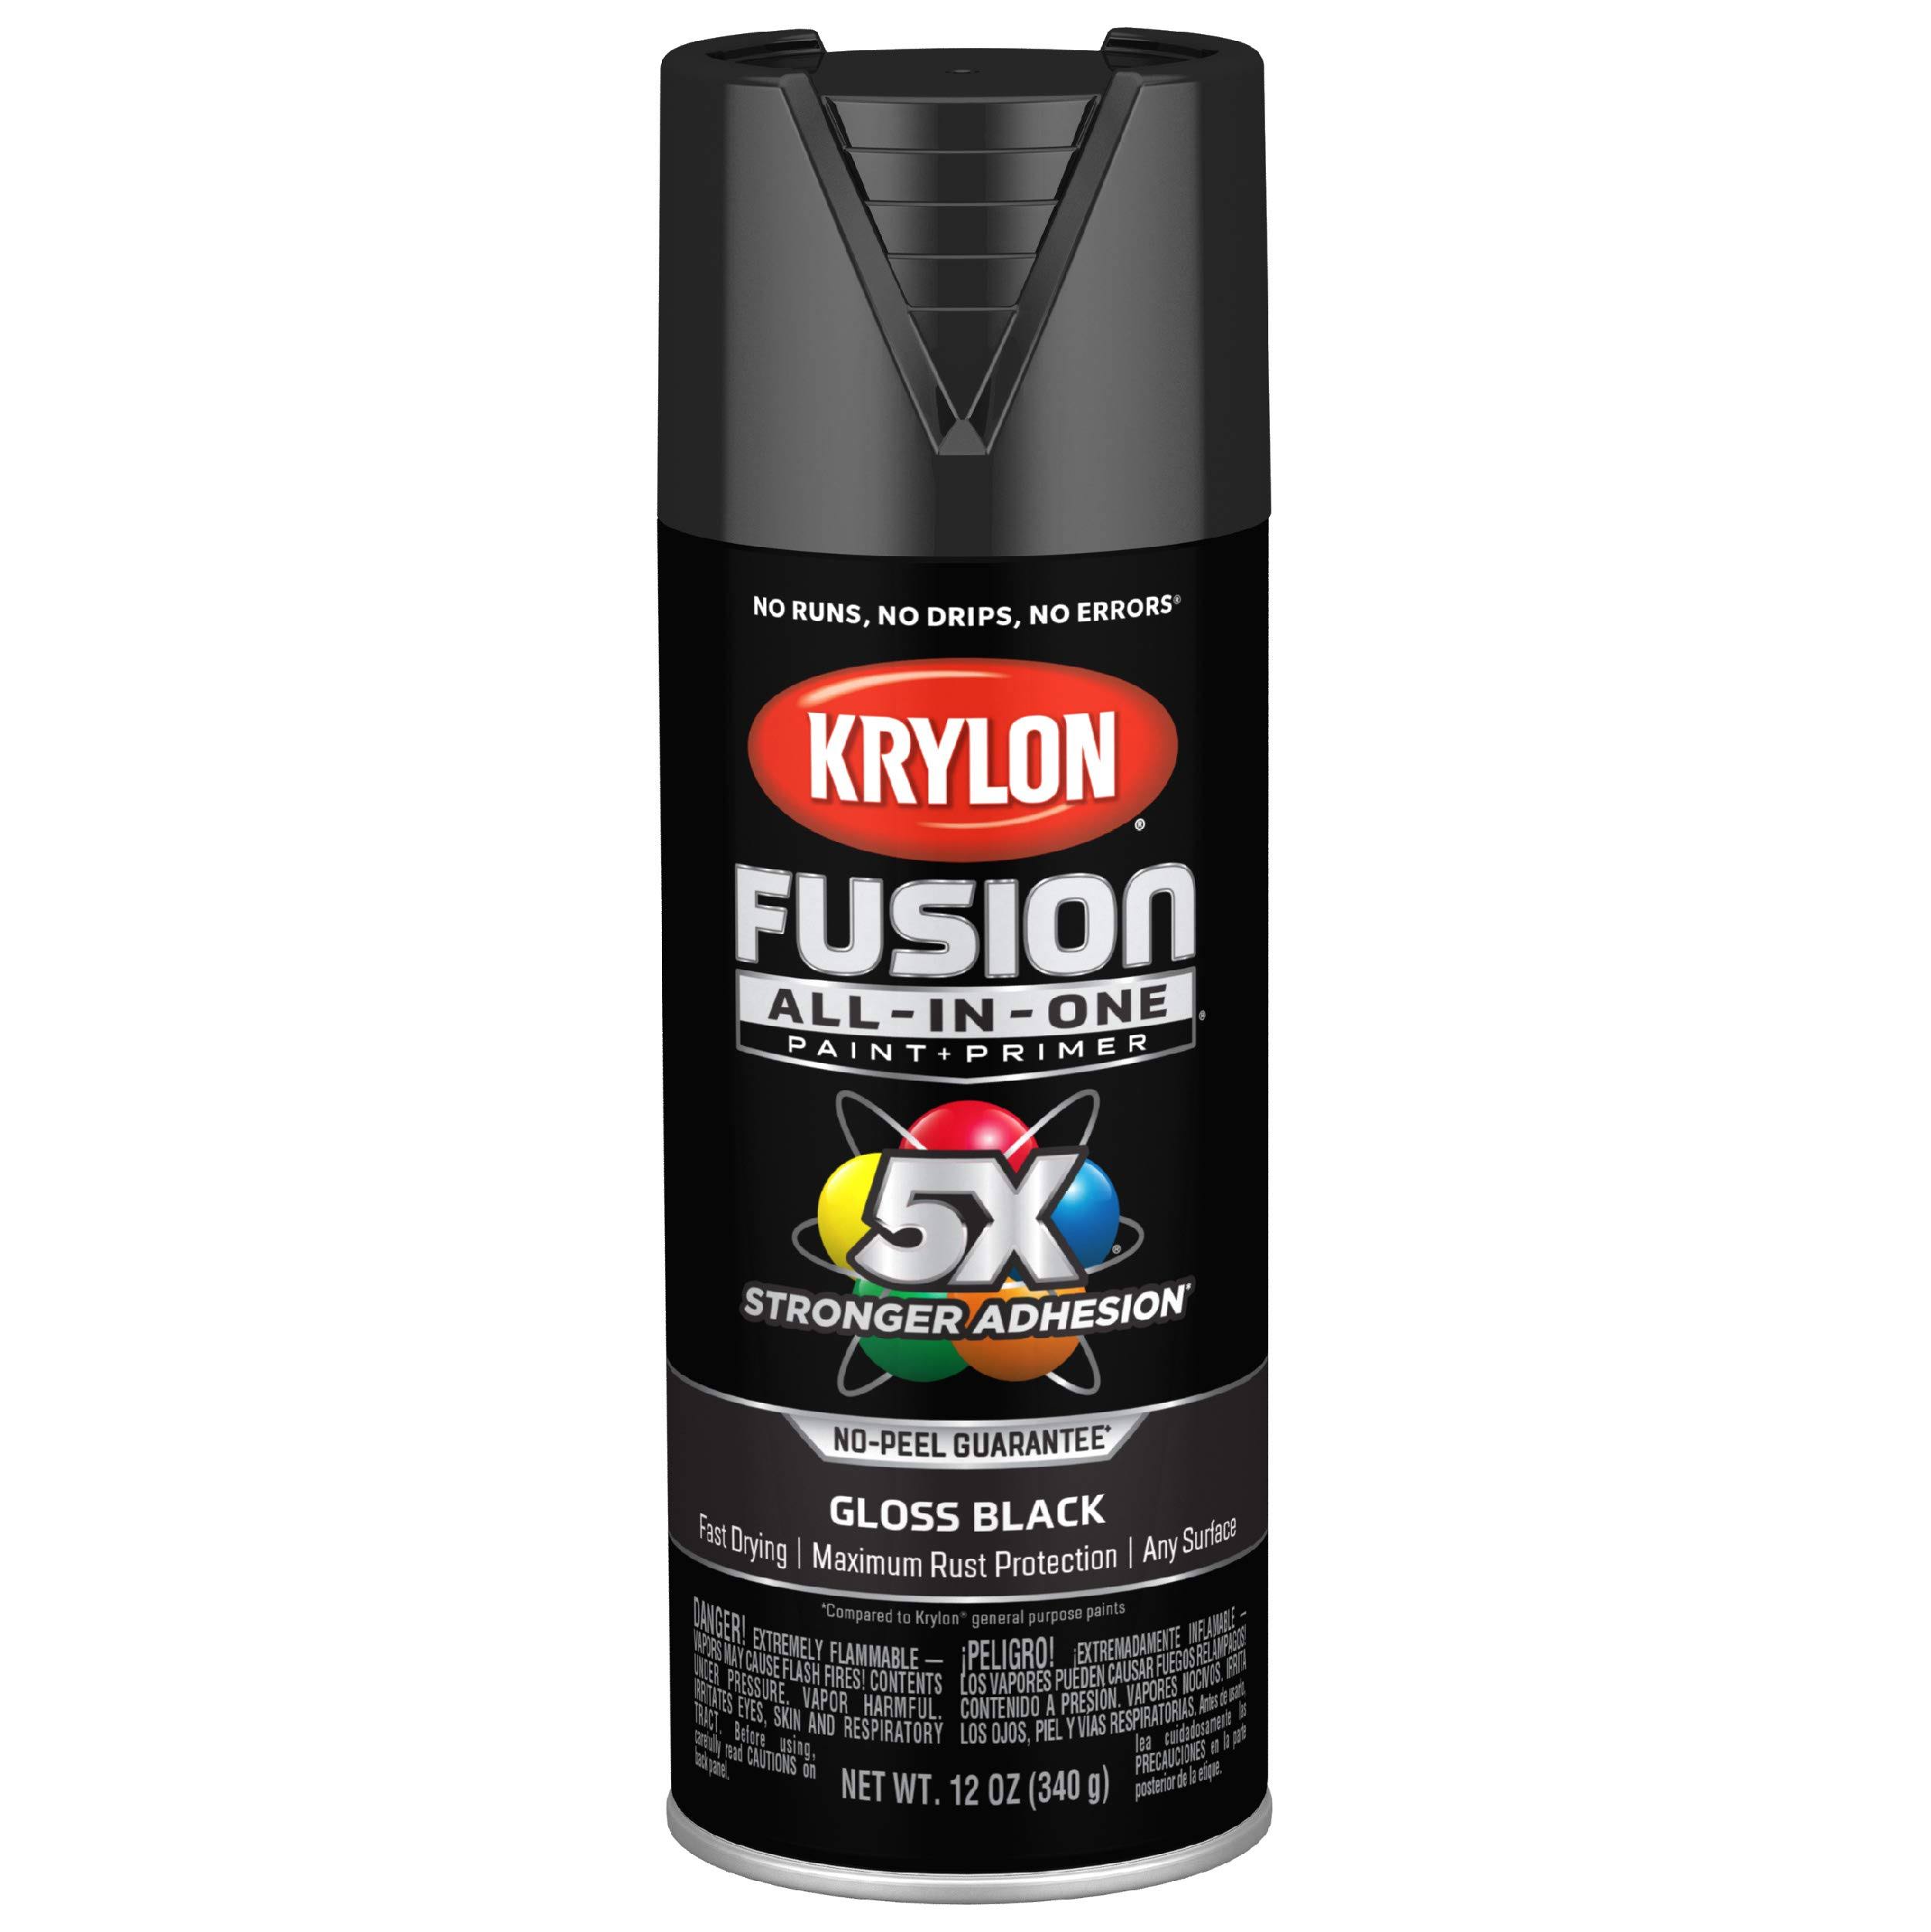 Krylon K02702007 Fusion All-in-One Paint & Primer Spray, Gloss Black, 12 oz